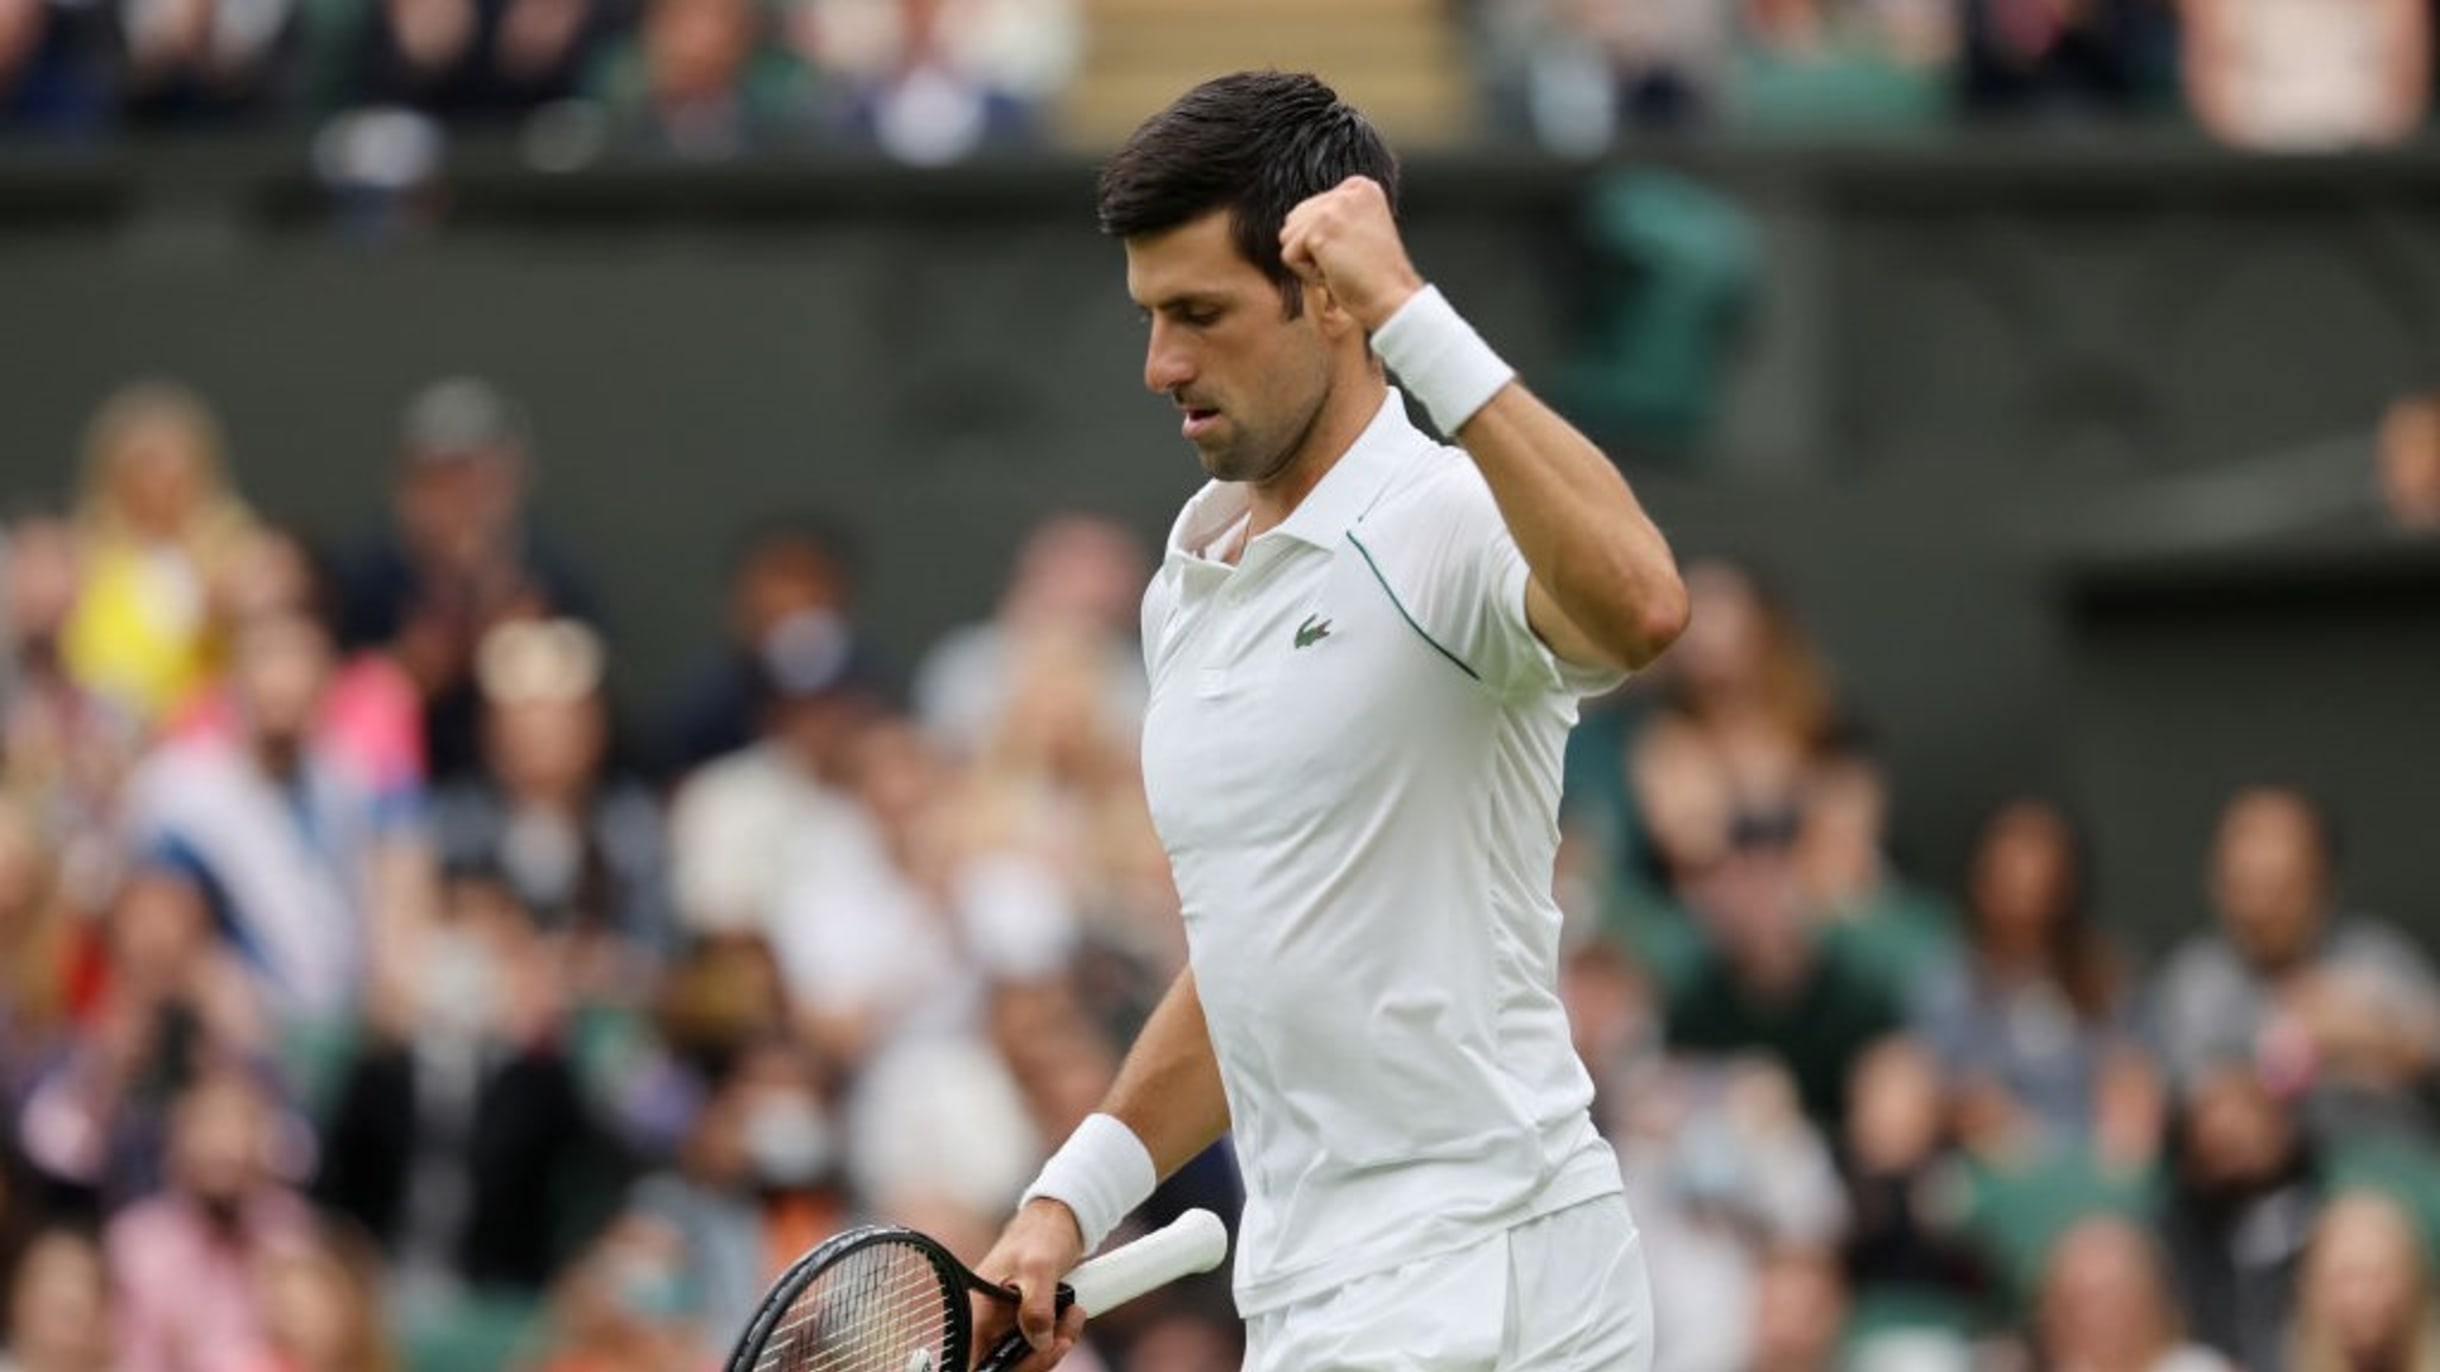 Novak Djokovic vs Matteo Berrettini, watch Wimbledon 2021 mens singles final live streaming and telecast in India